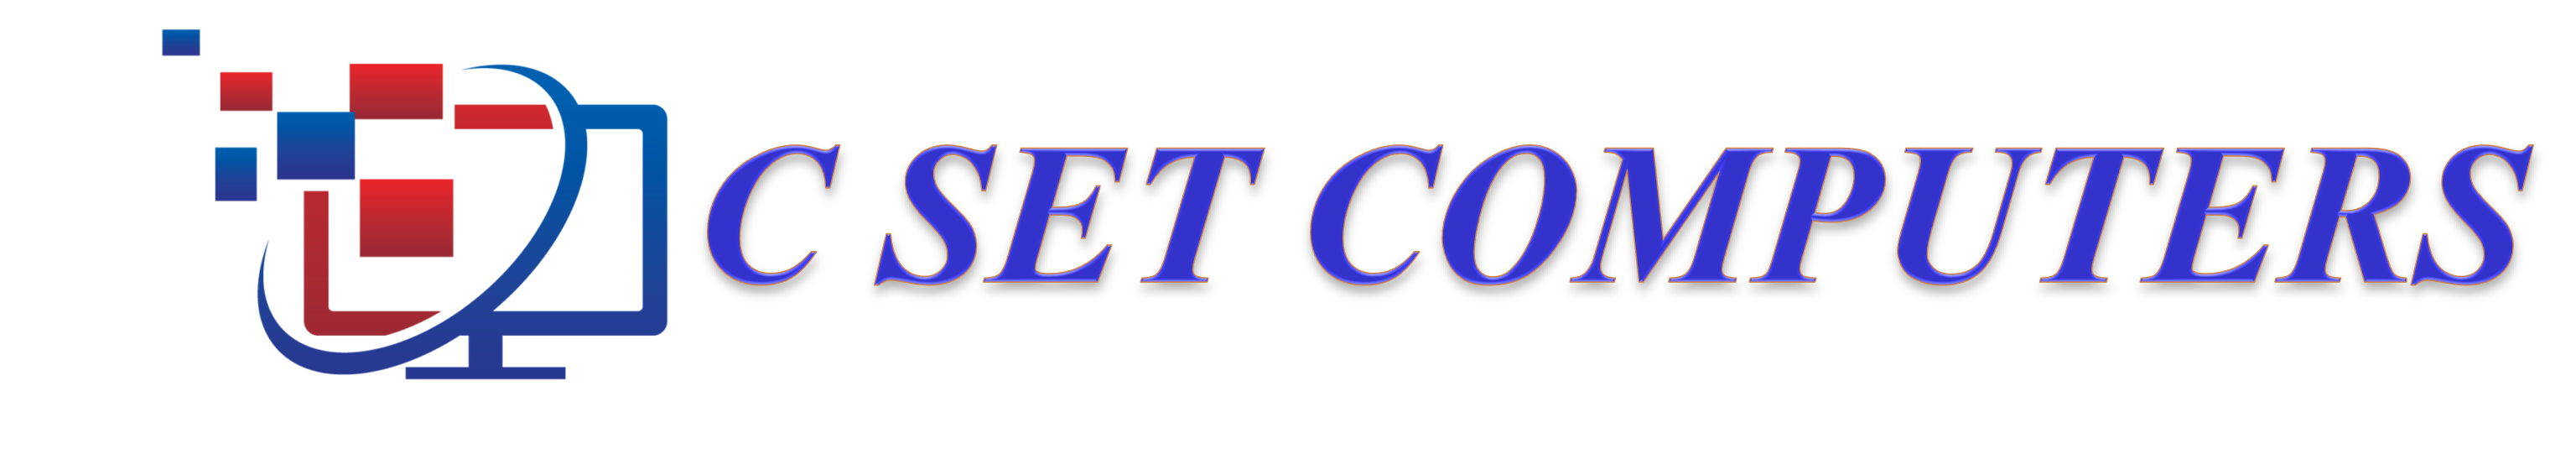 C Set Computers Logo